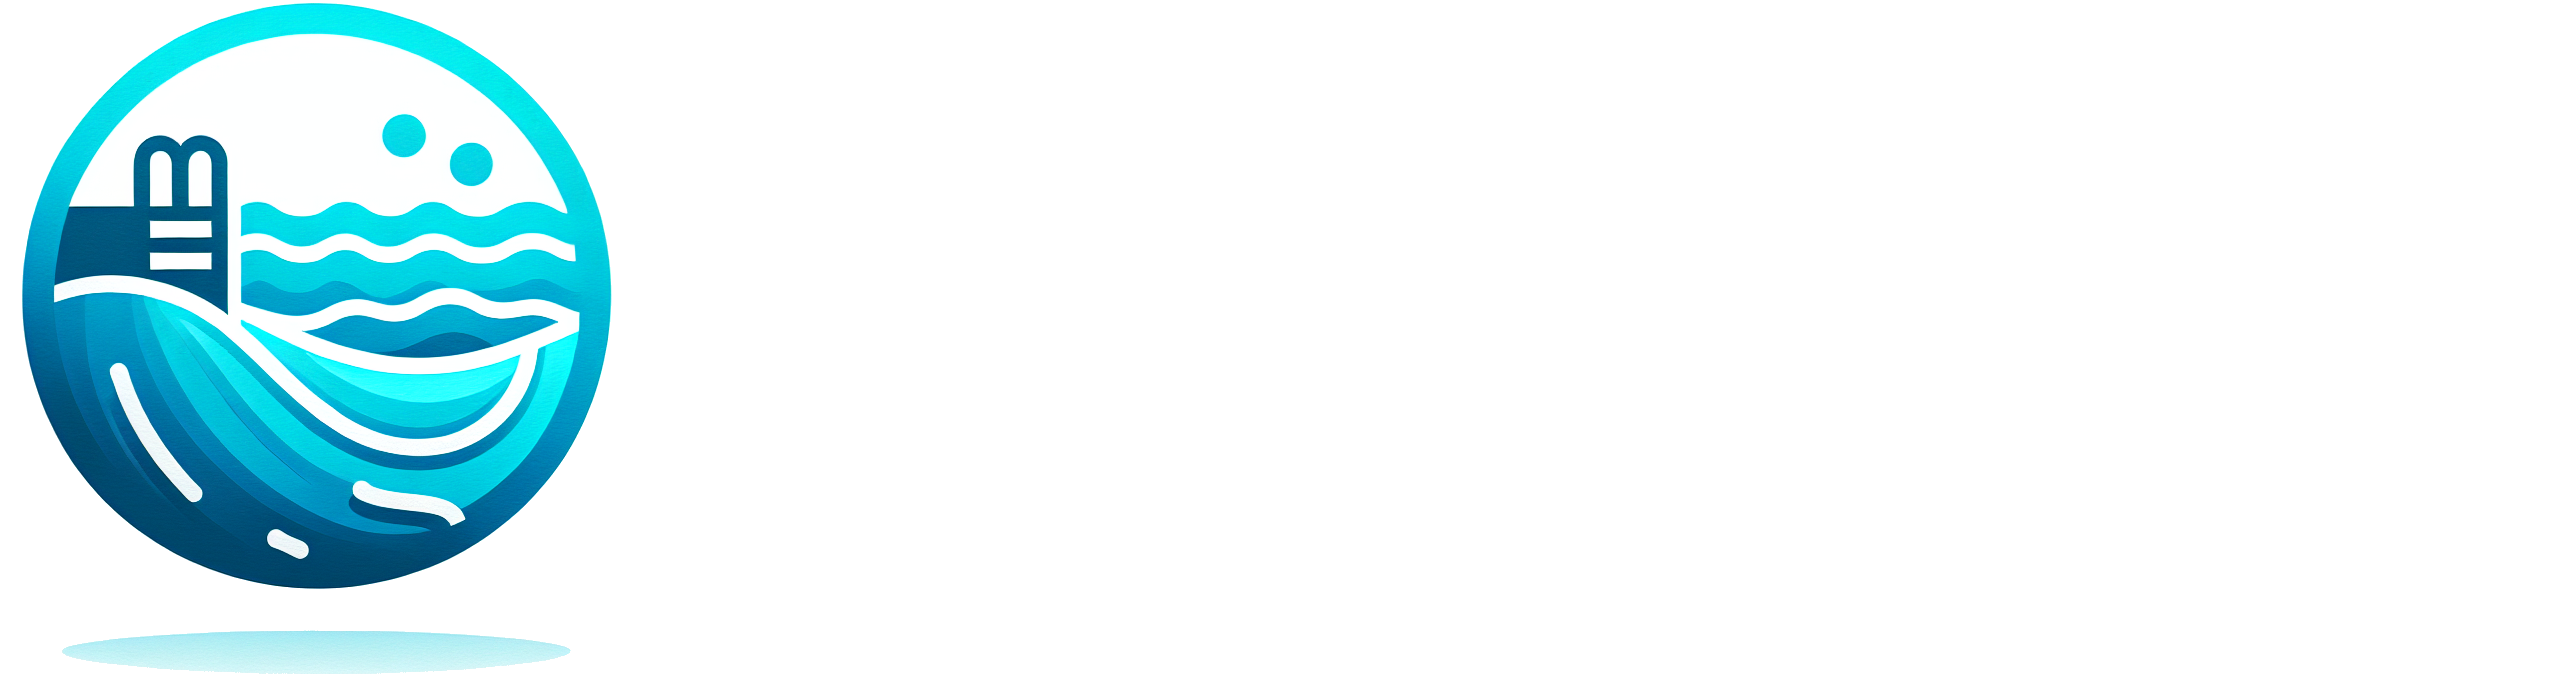 Local Pool Pro